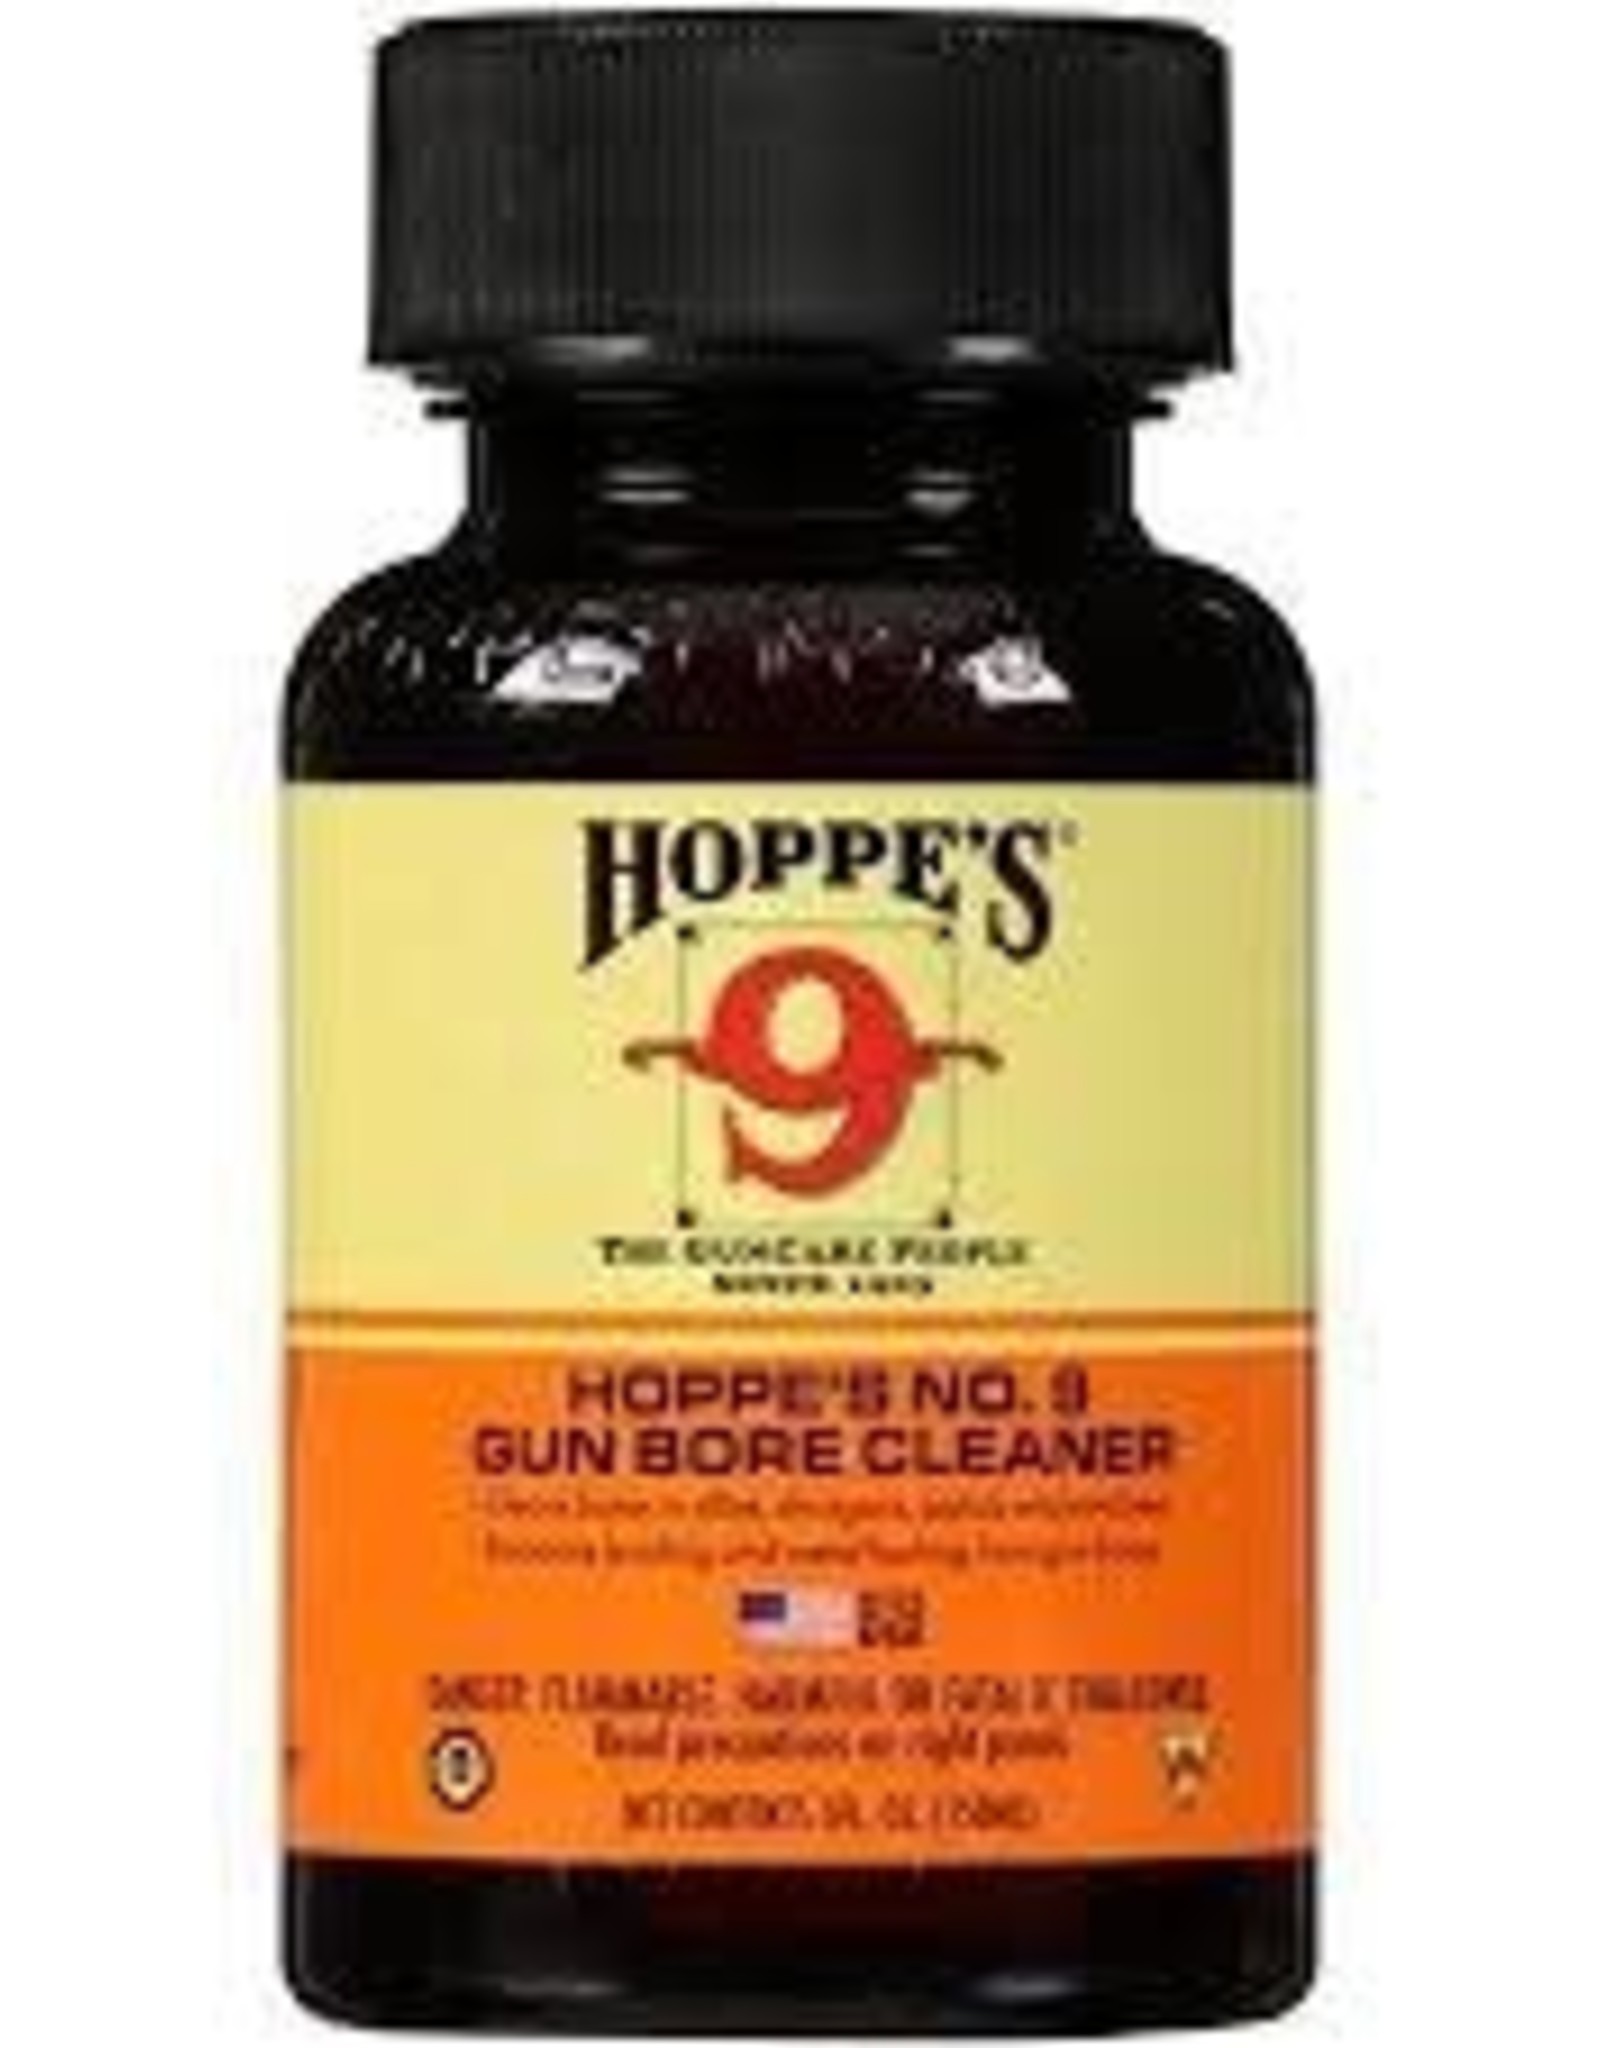 Hoppe’s NO.9 Gun Bore Cleaner